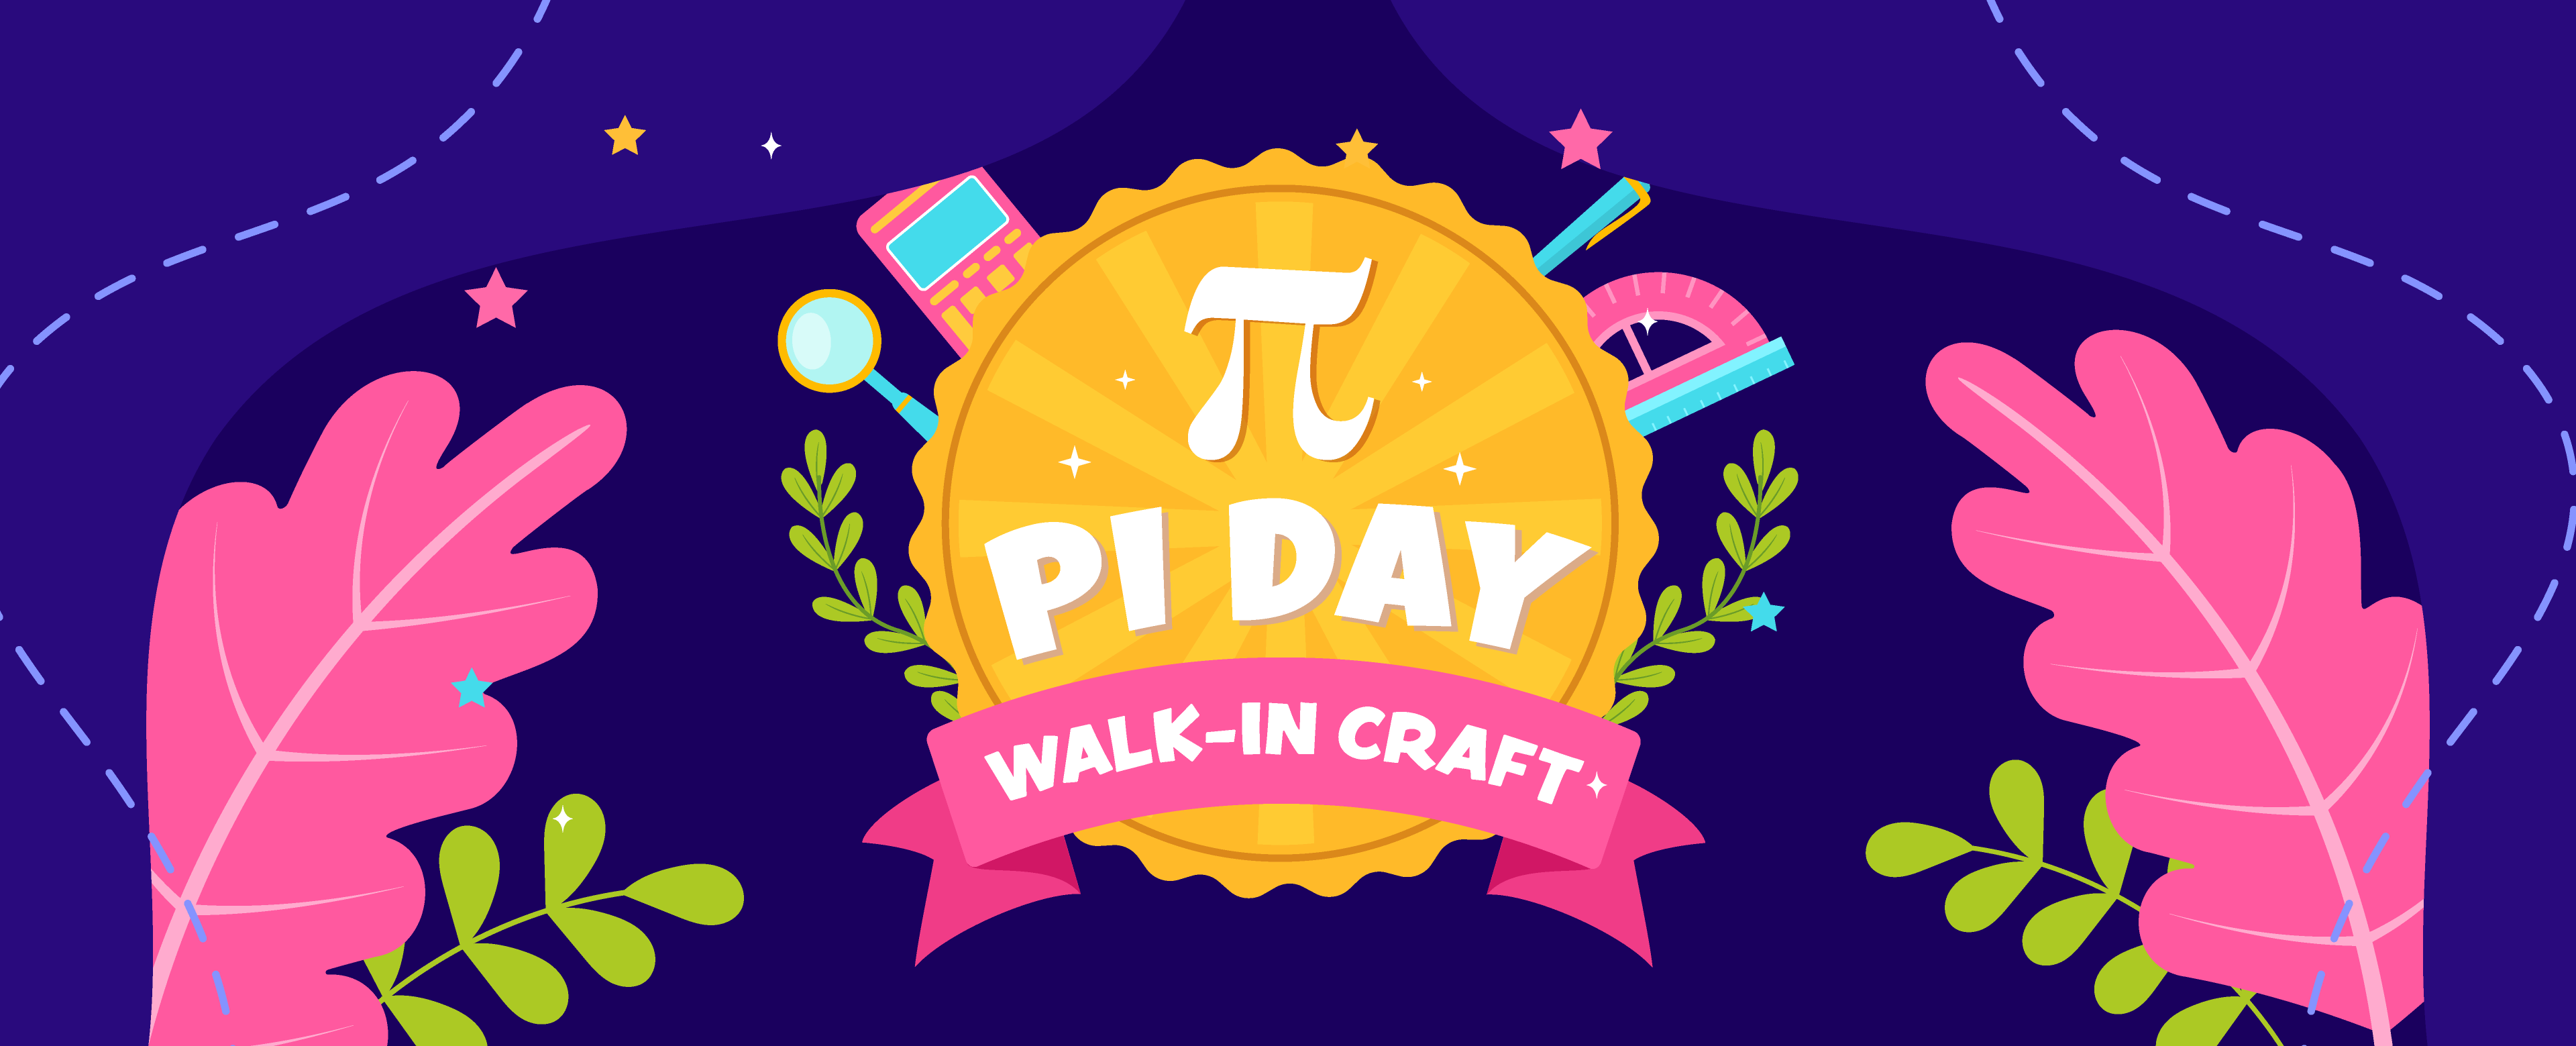 Pi Day Walk In Craft